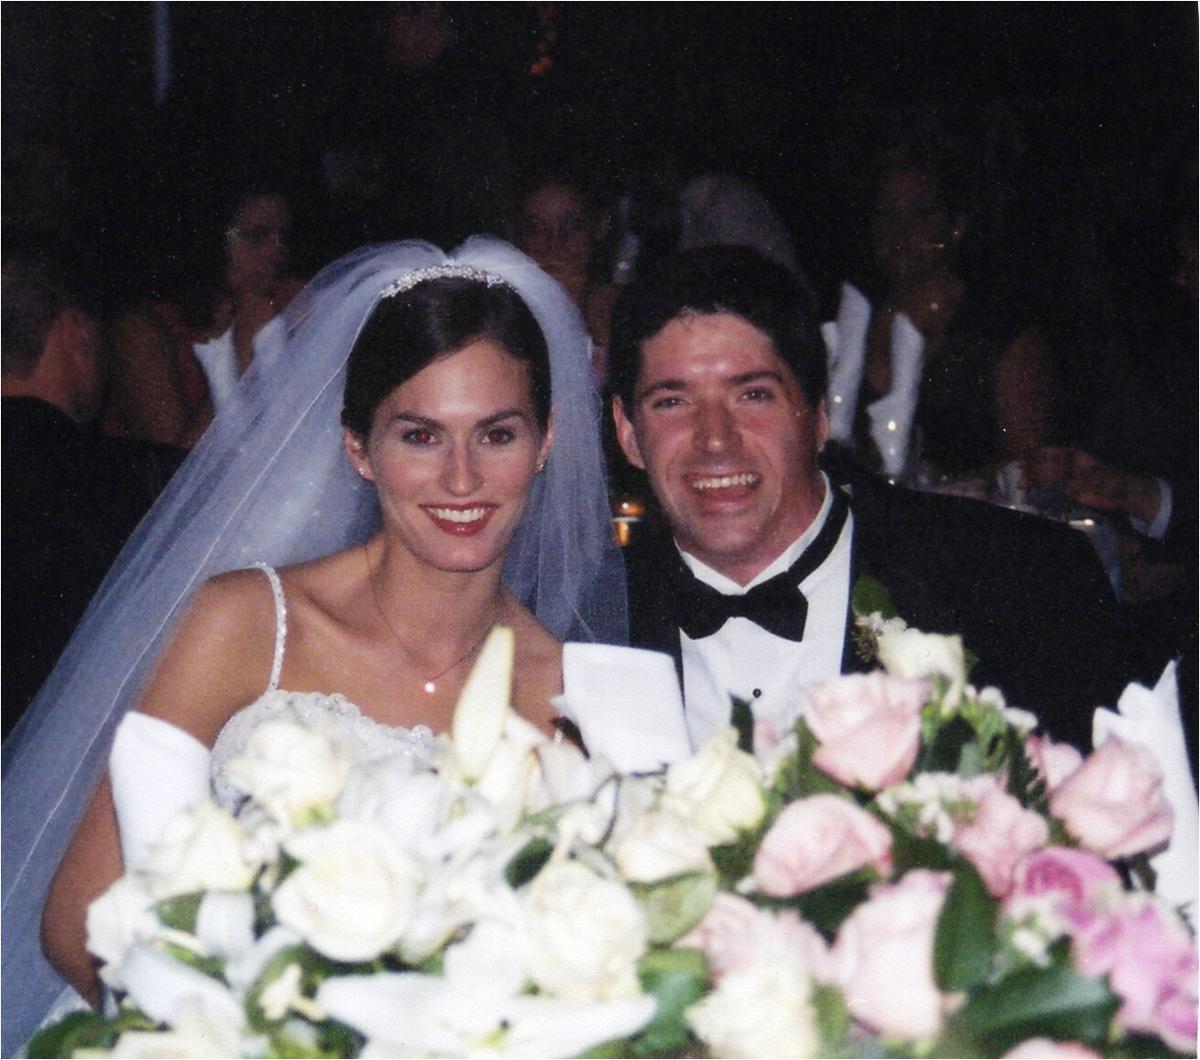 O'Leary married Beth Hittler on Nov. 22, 2003. (Courtesy of John O'Leary)